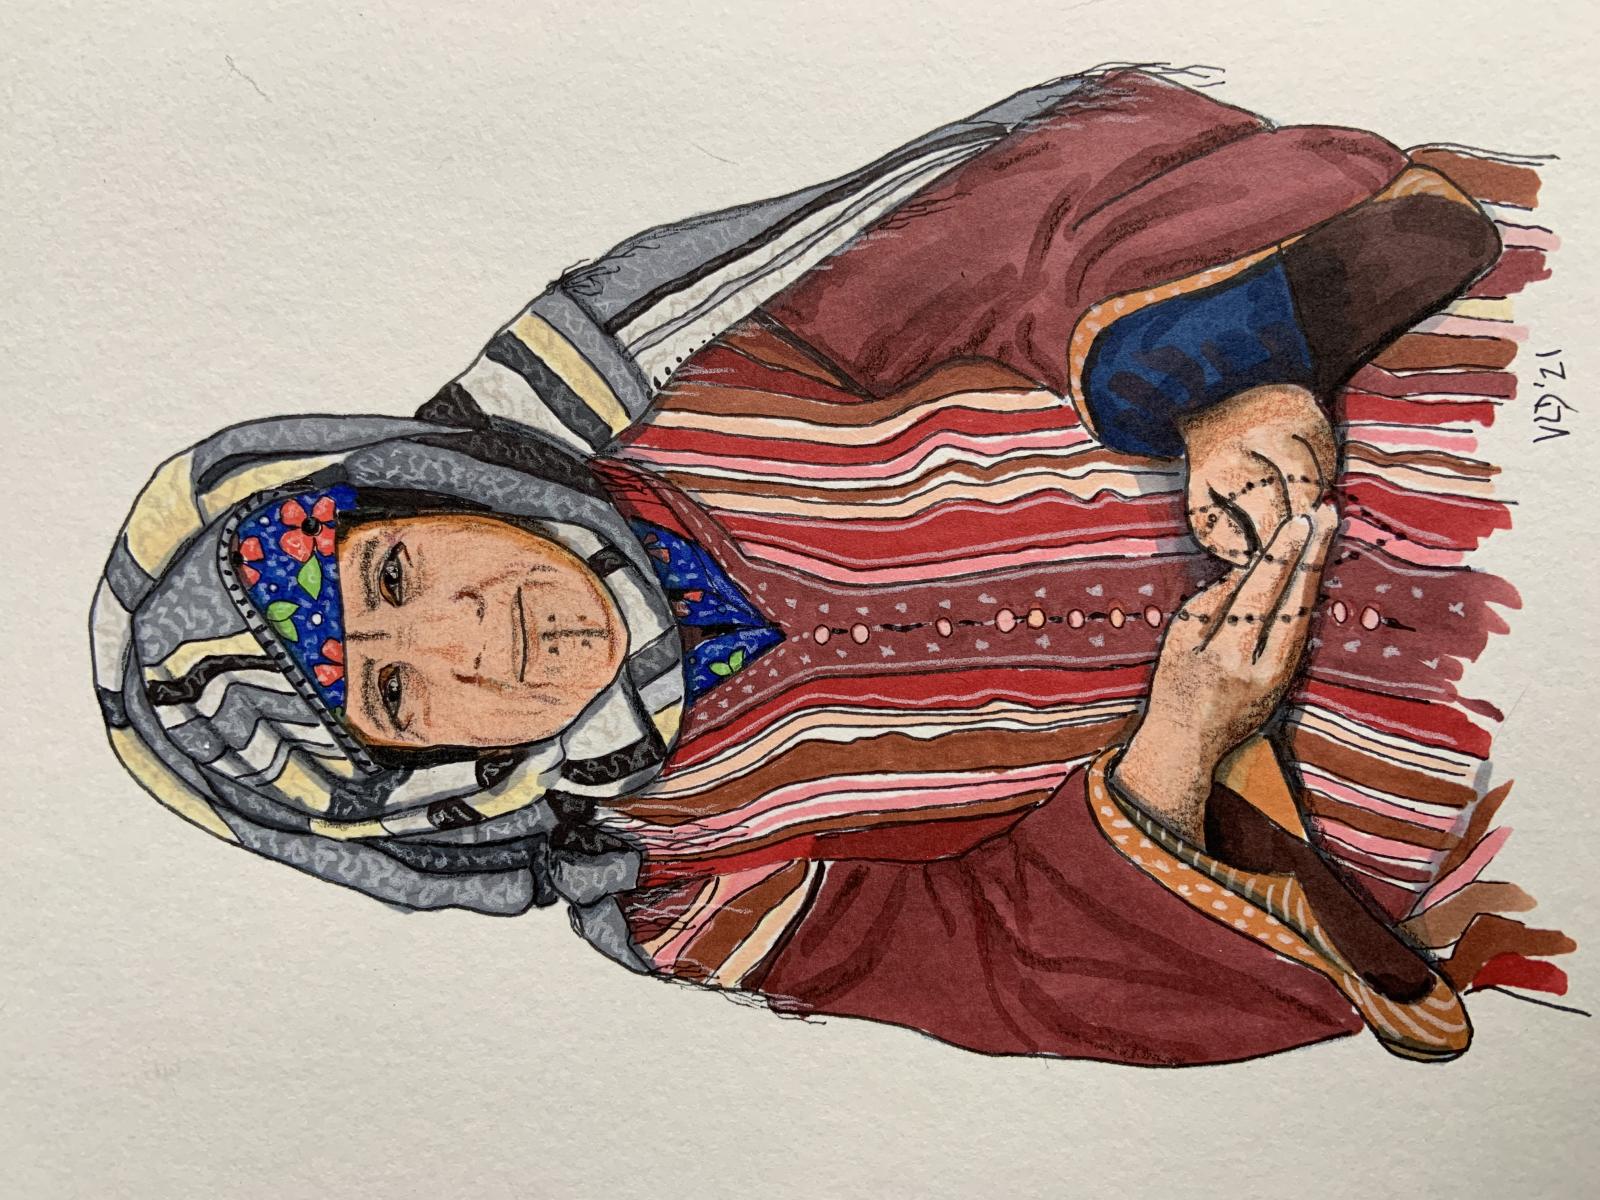 Elderly Berber woman from Algeria (part of a Series on Indigenous Women across the world)